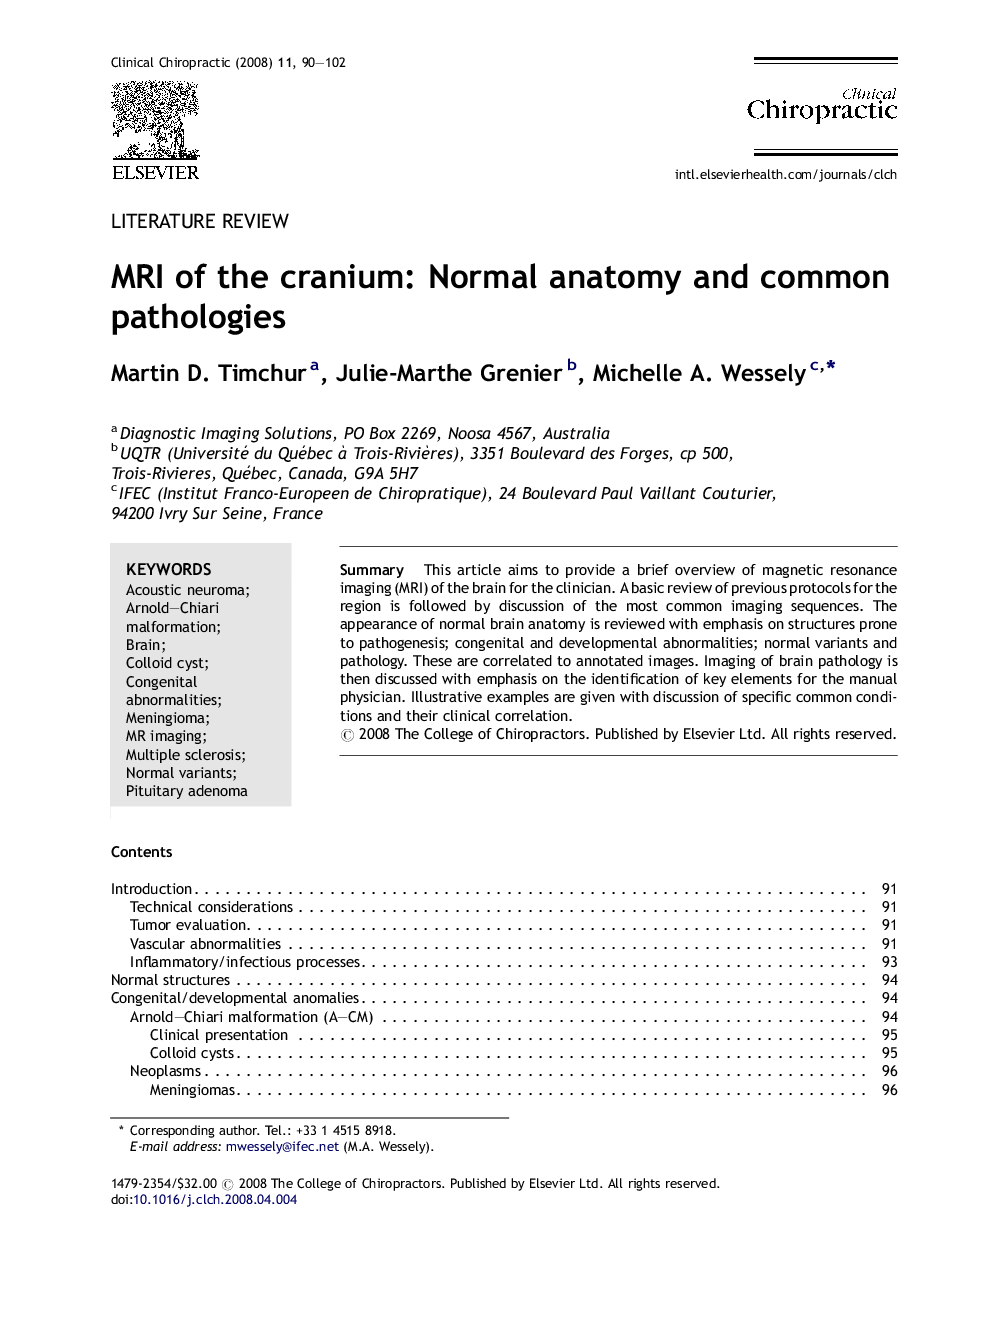 MRI of the cranium: Normal anatomy and common pathologies